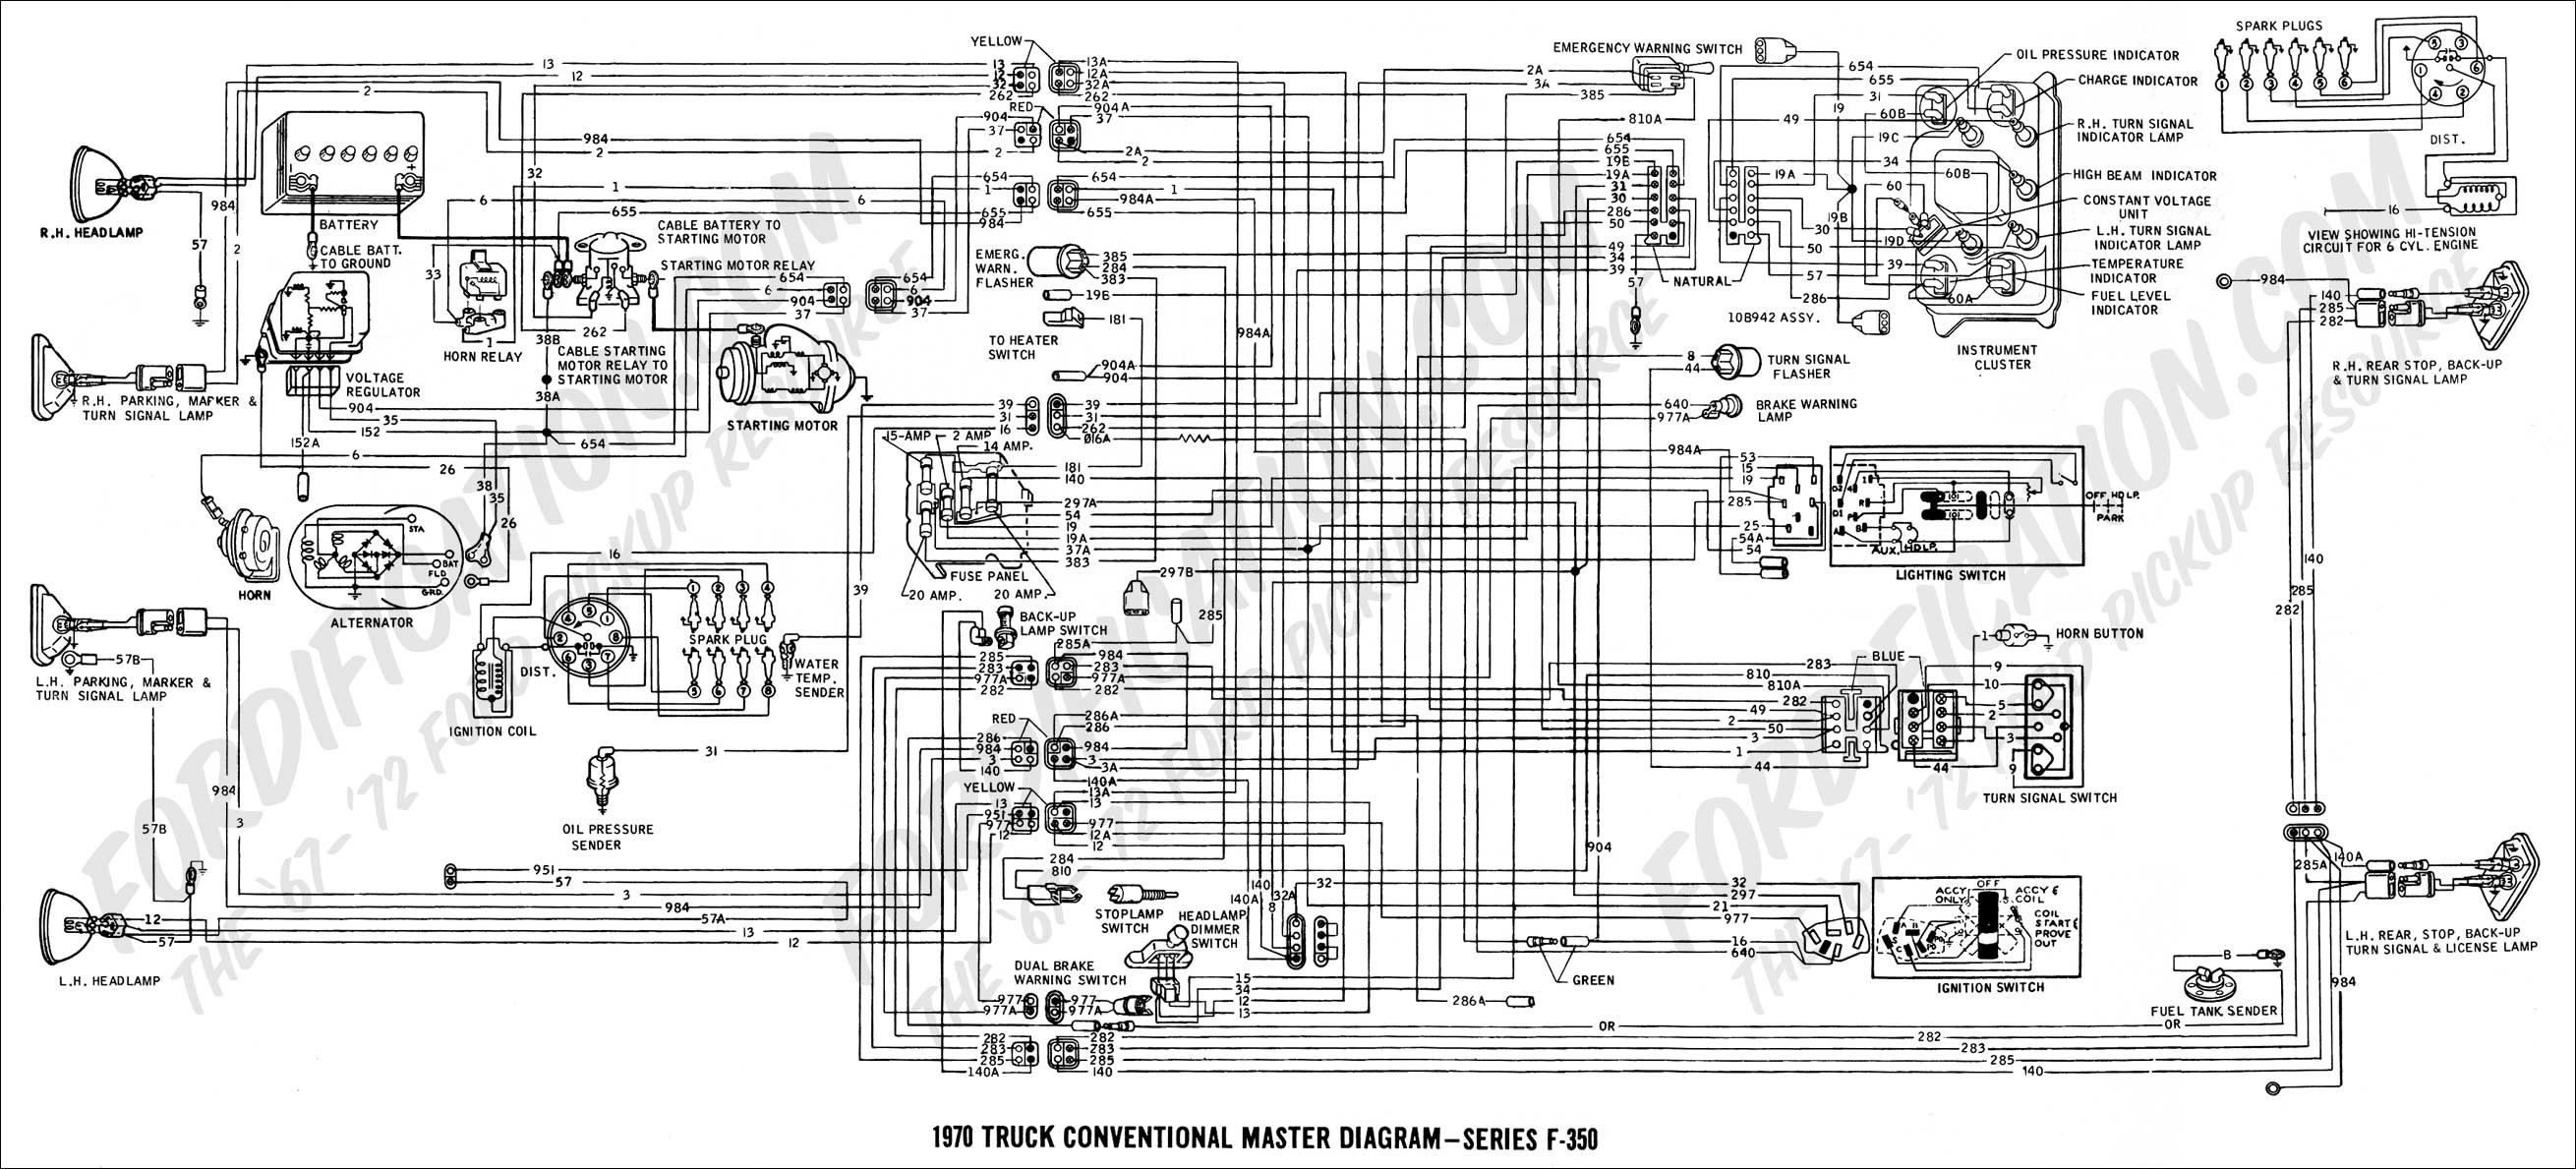 1998 ford F150 Pickup Truck Car Radio Wiring Diagram 2000 ford F 250 Wiring Diagram Also 2006 ford E250 Van Wiring Of 1998 ford F150 Pickup Truck Car Radio Wiring Diagram